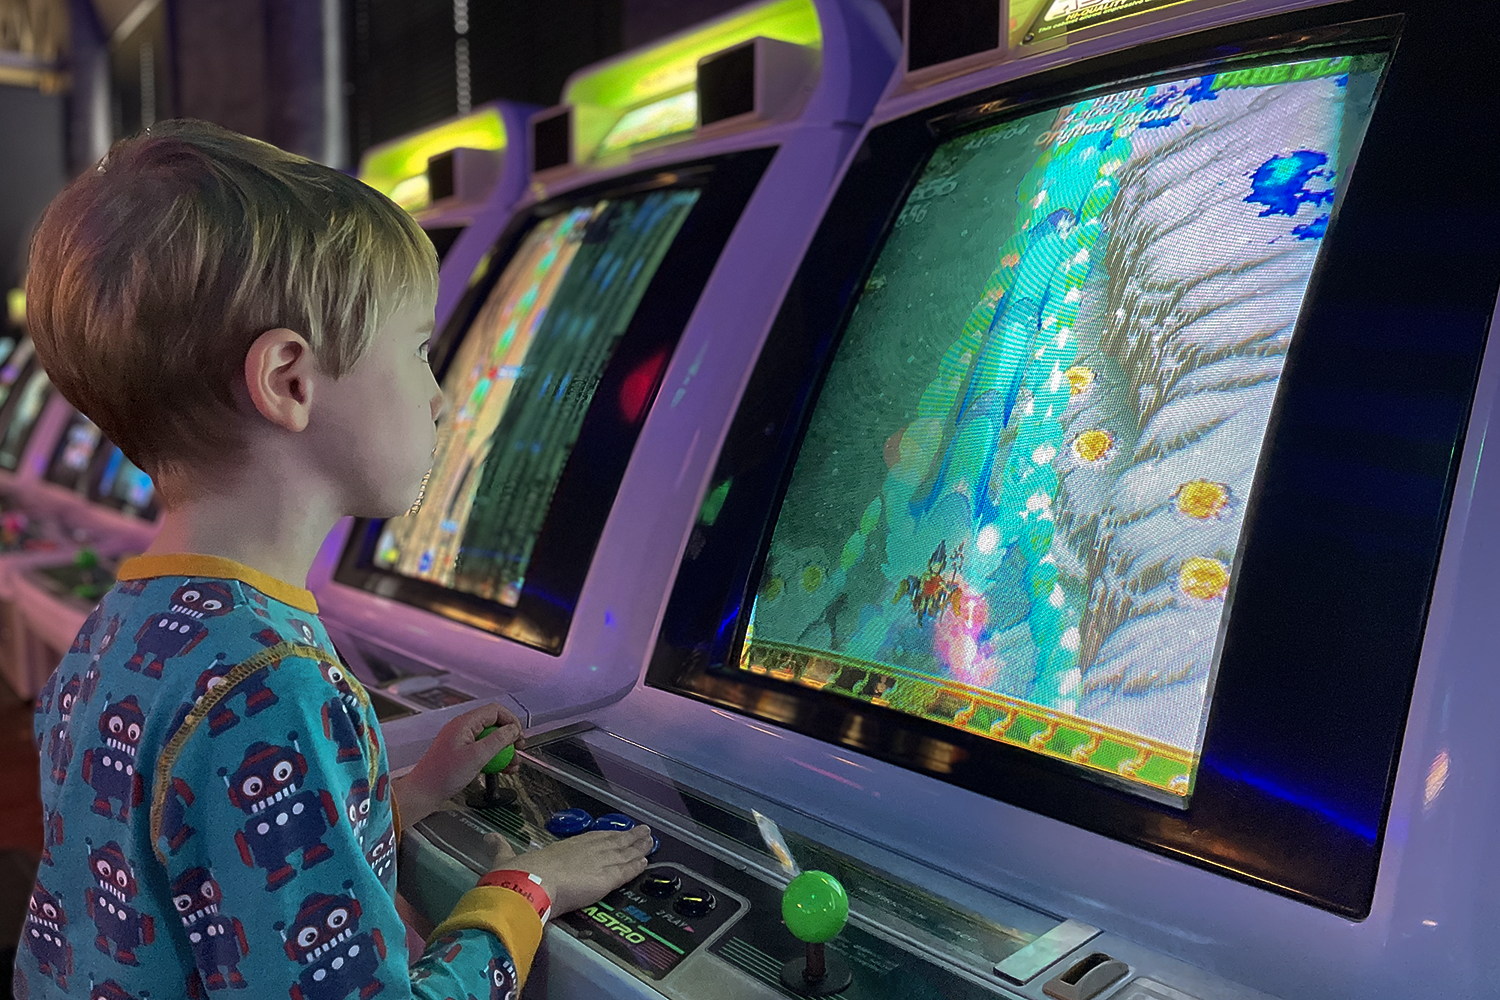 Gabe playing an arcade machine